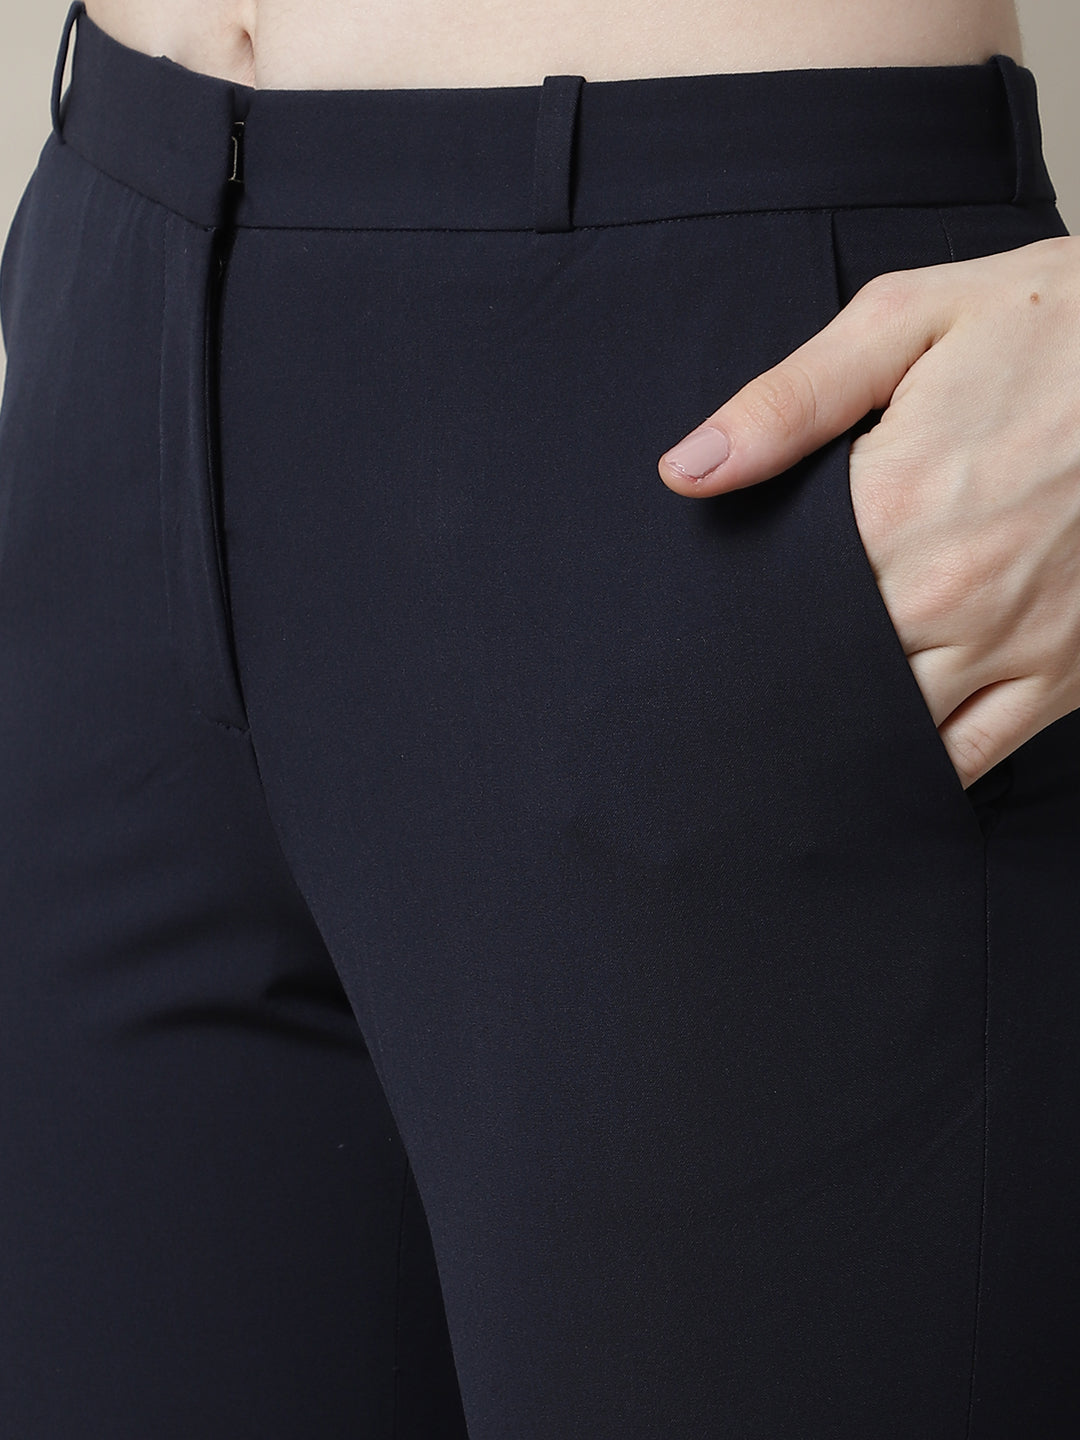 Buy Navy Blue Women Trousers Online in India  Hirawats